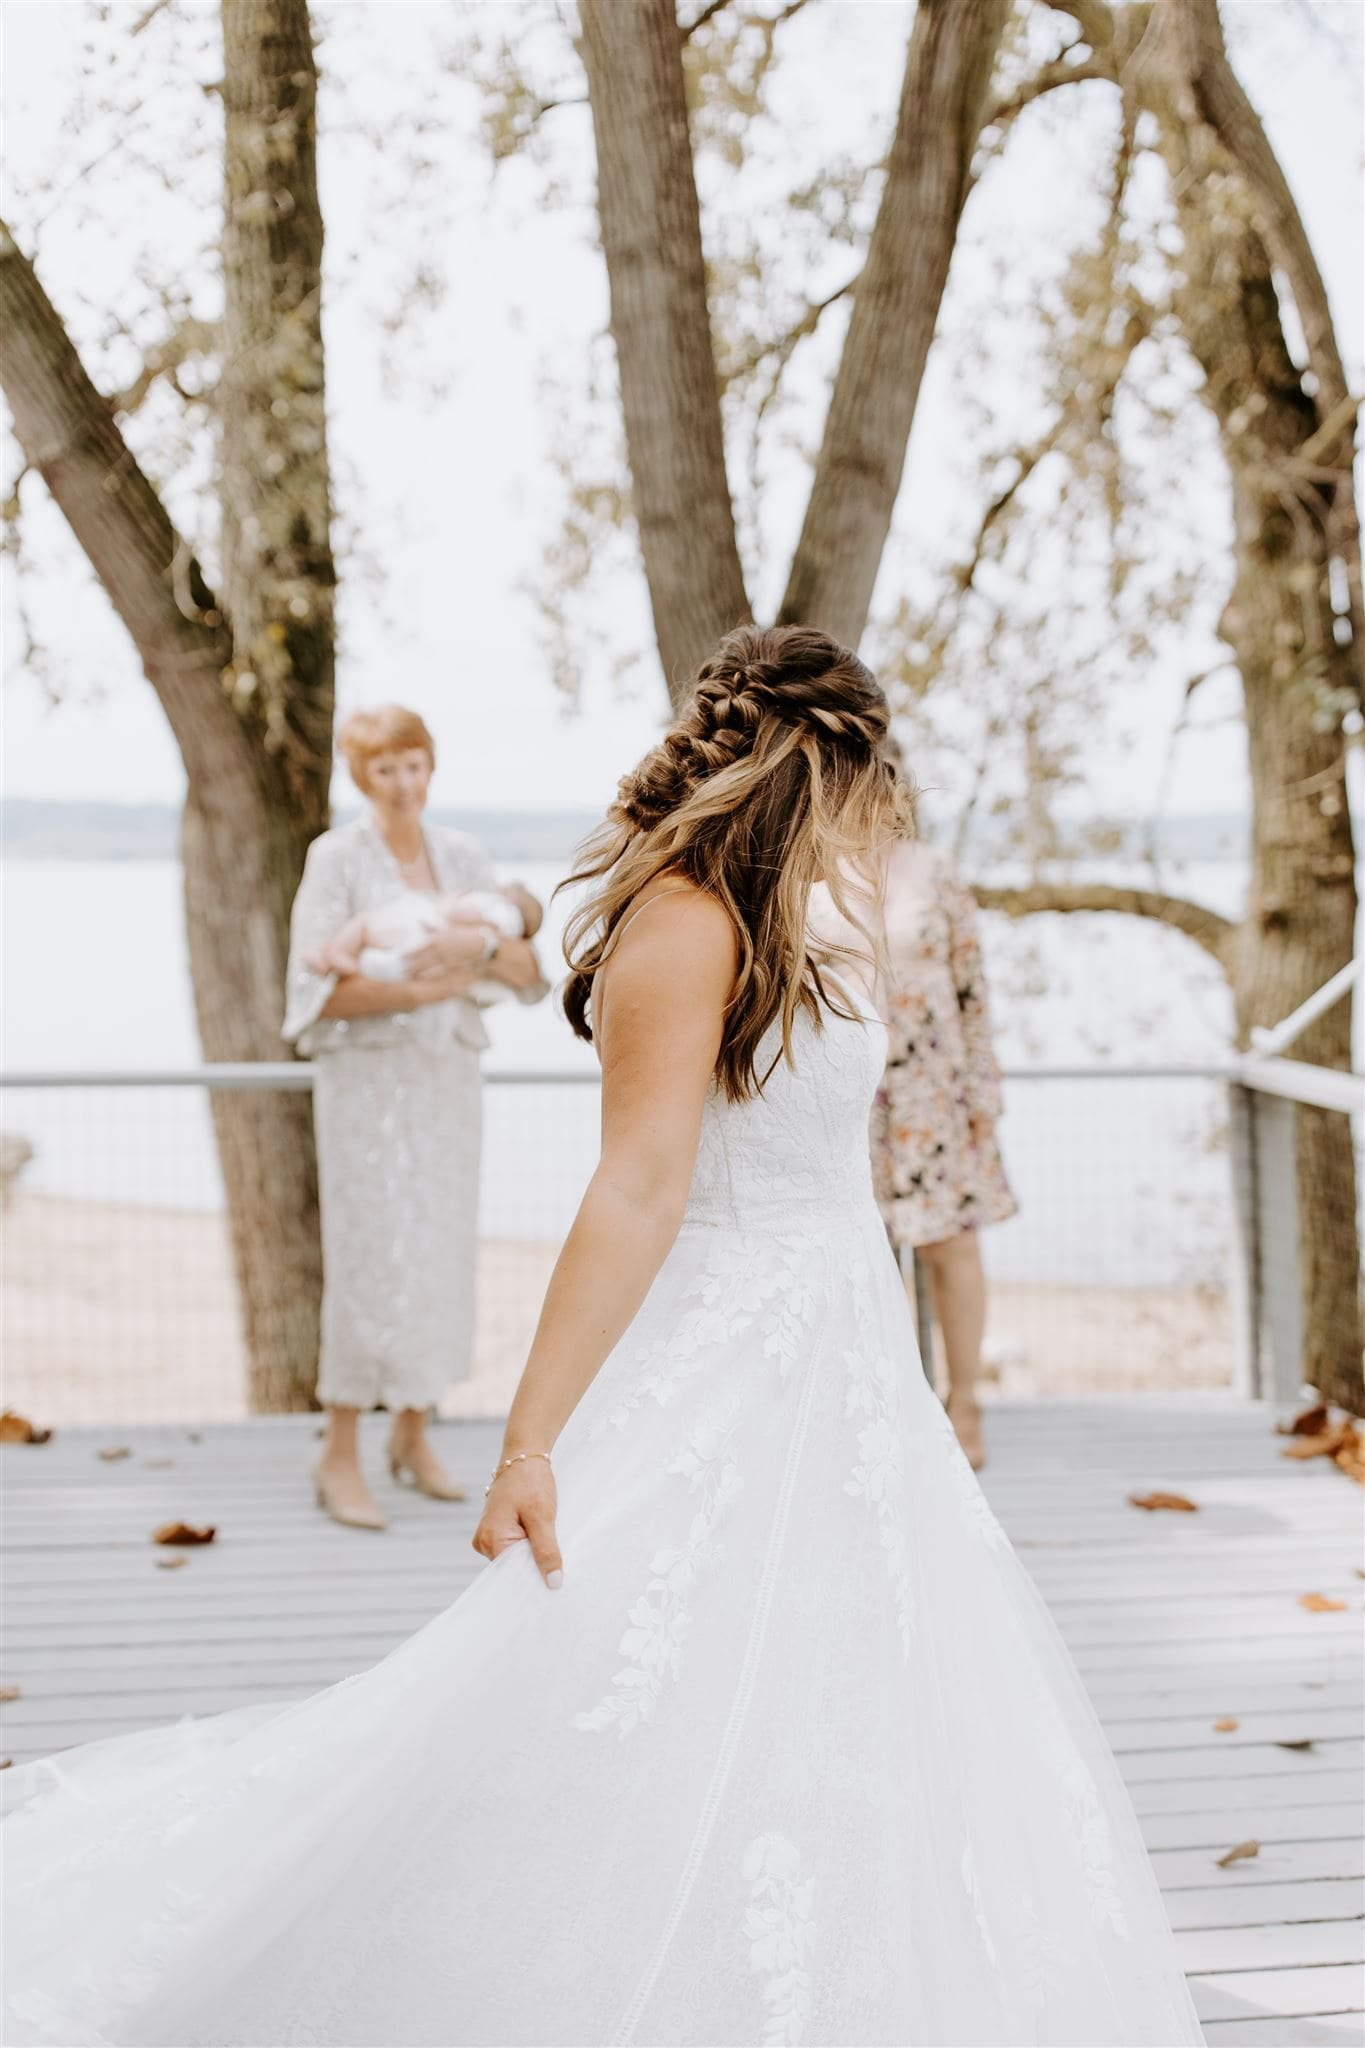  hannah spins in her wedding dress 